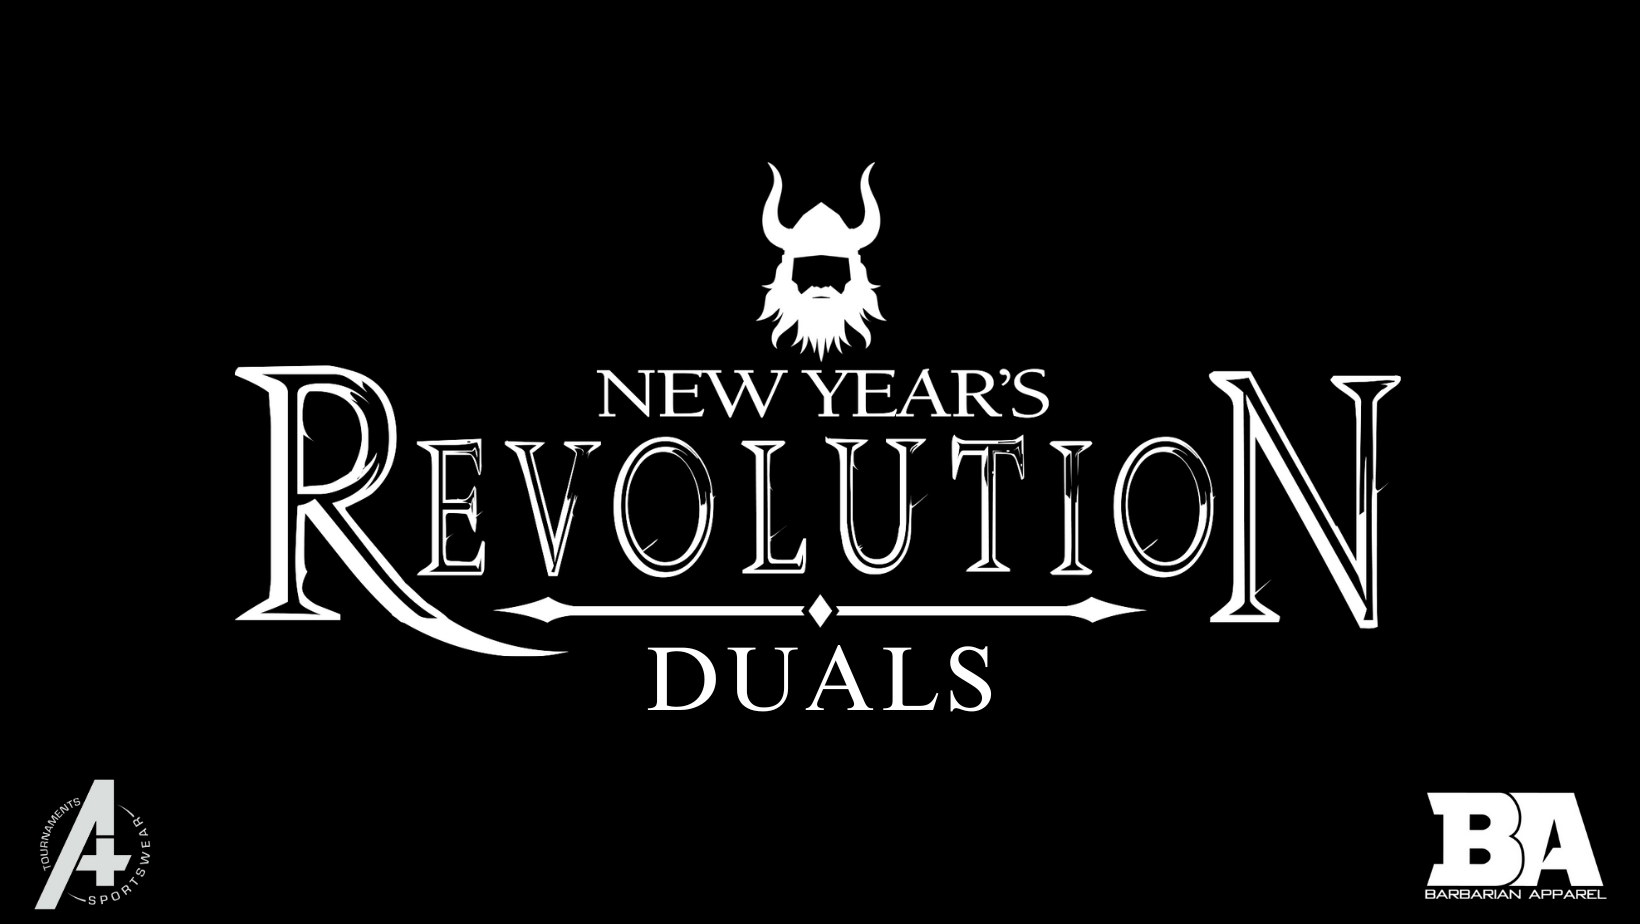 New Year's Revolution Duals